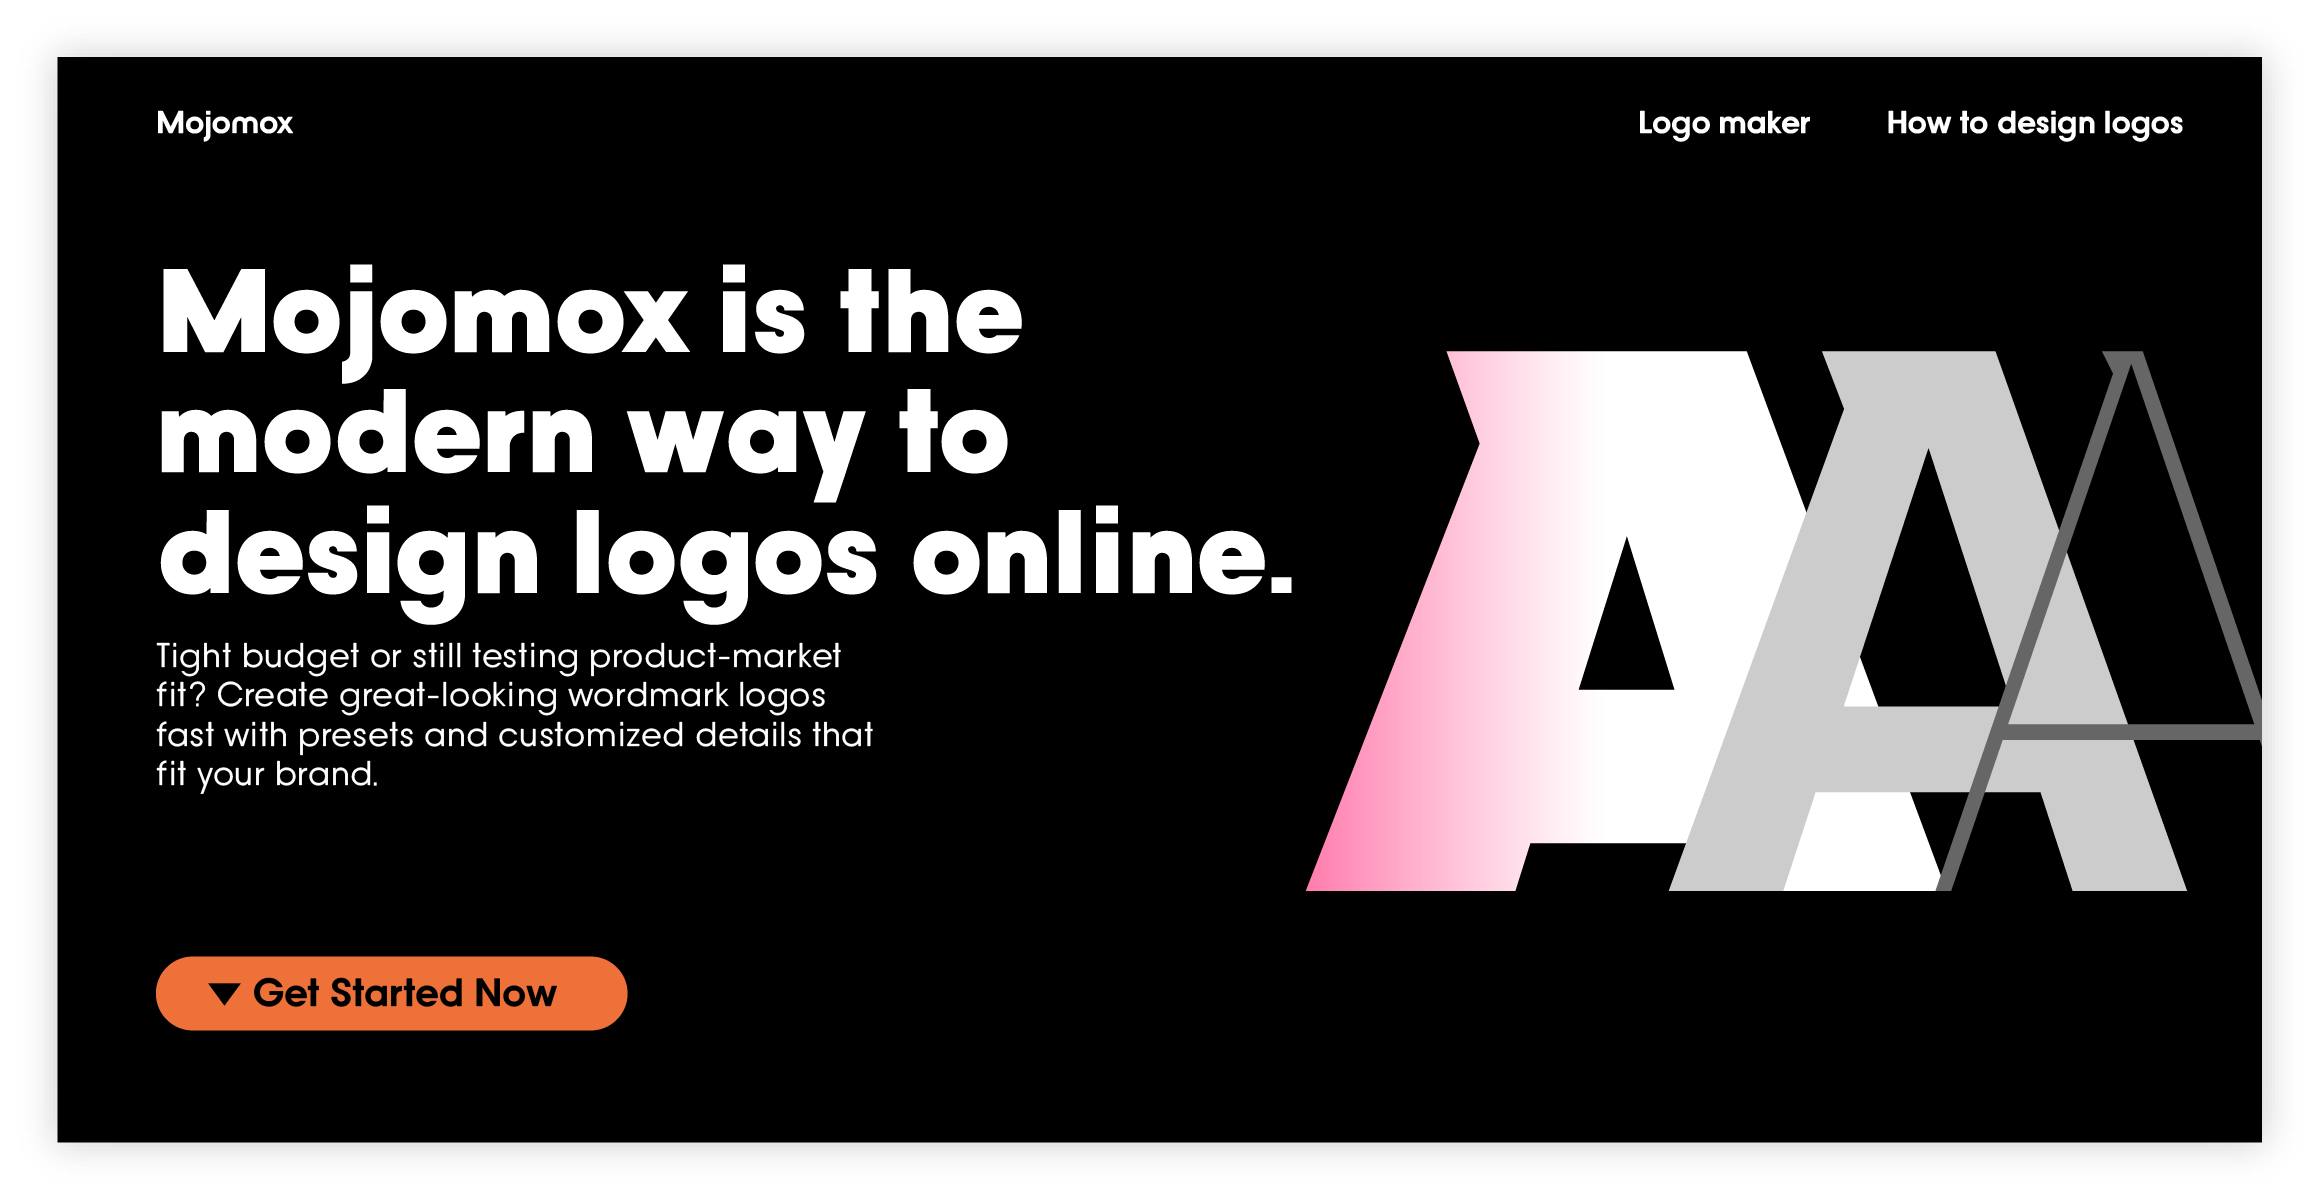 Mojomox logo maker overview